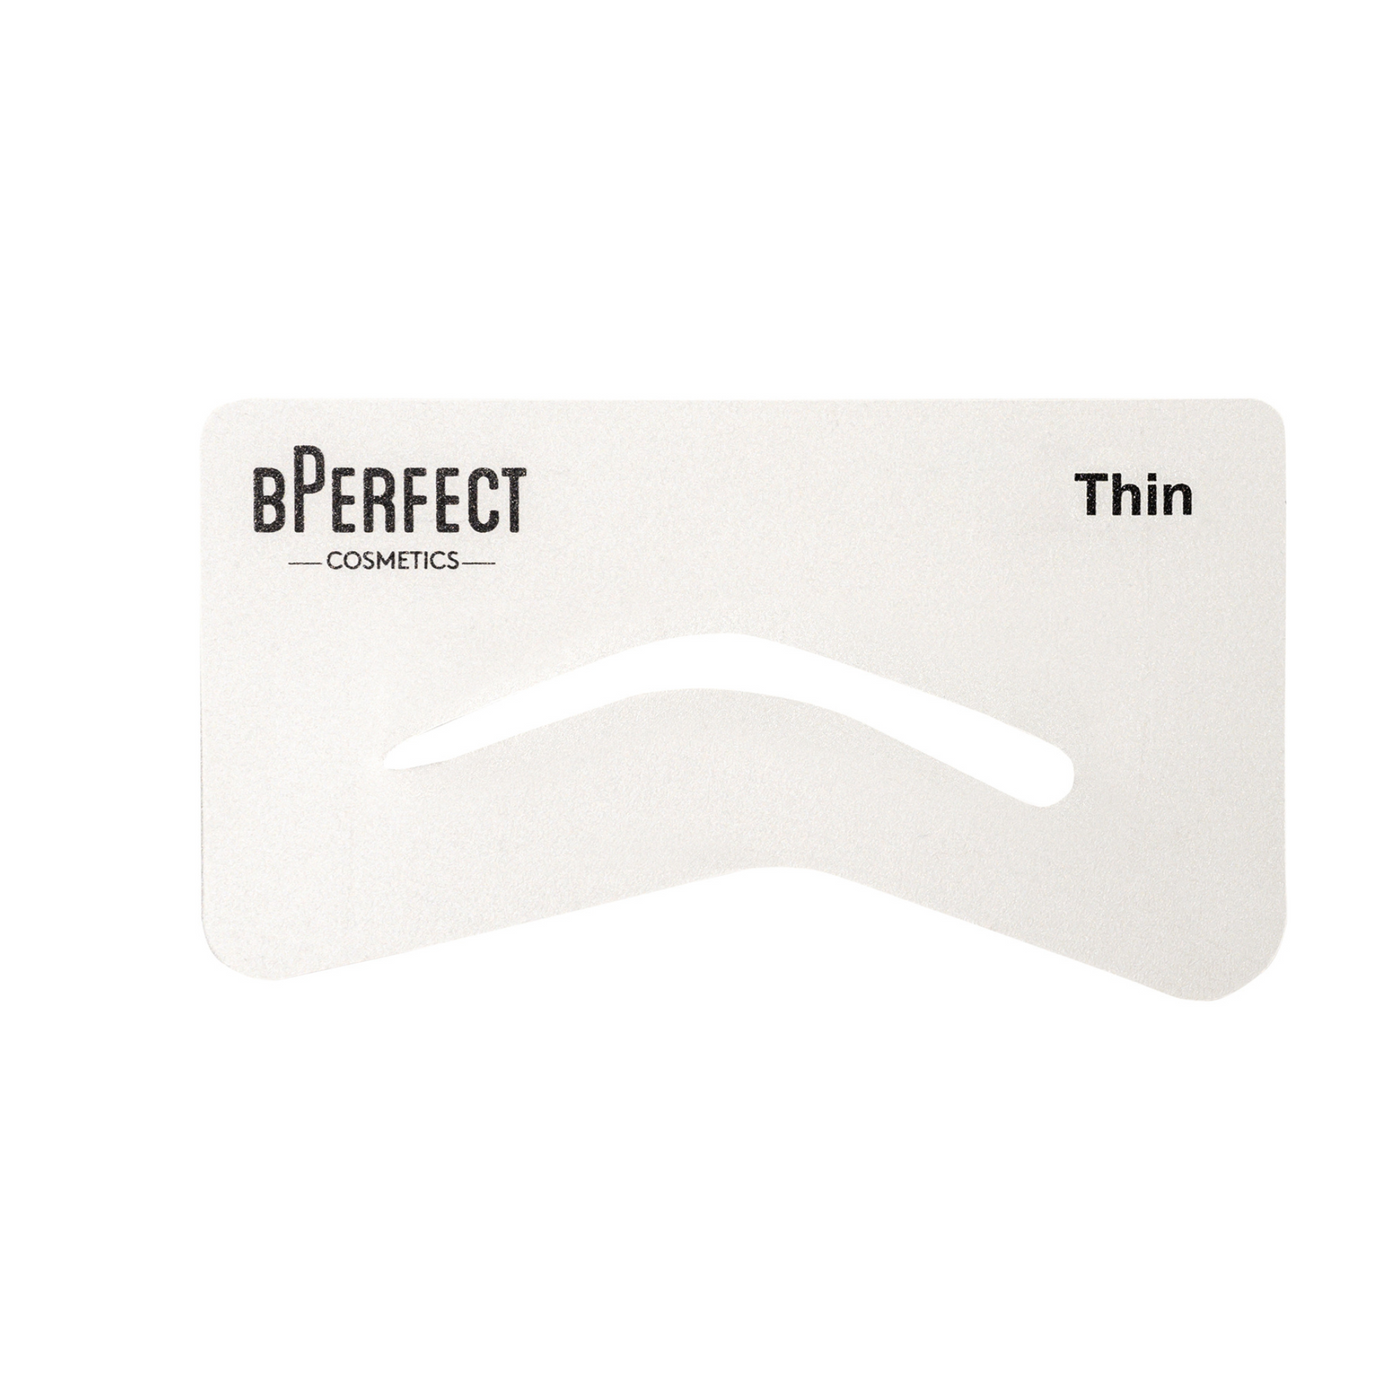 Indestructi'Brow Eyebrow Stencil Kit